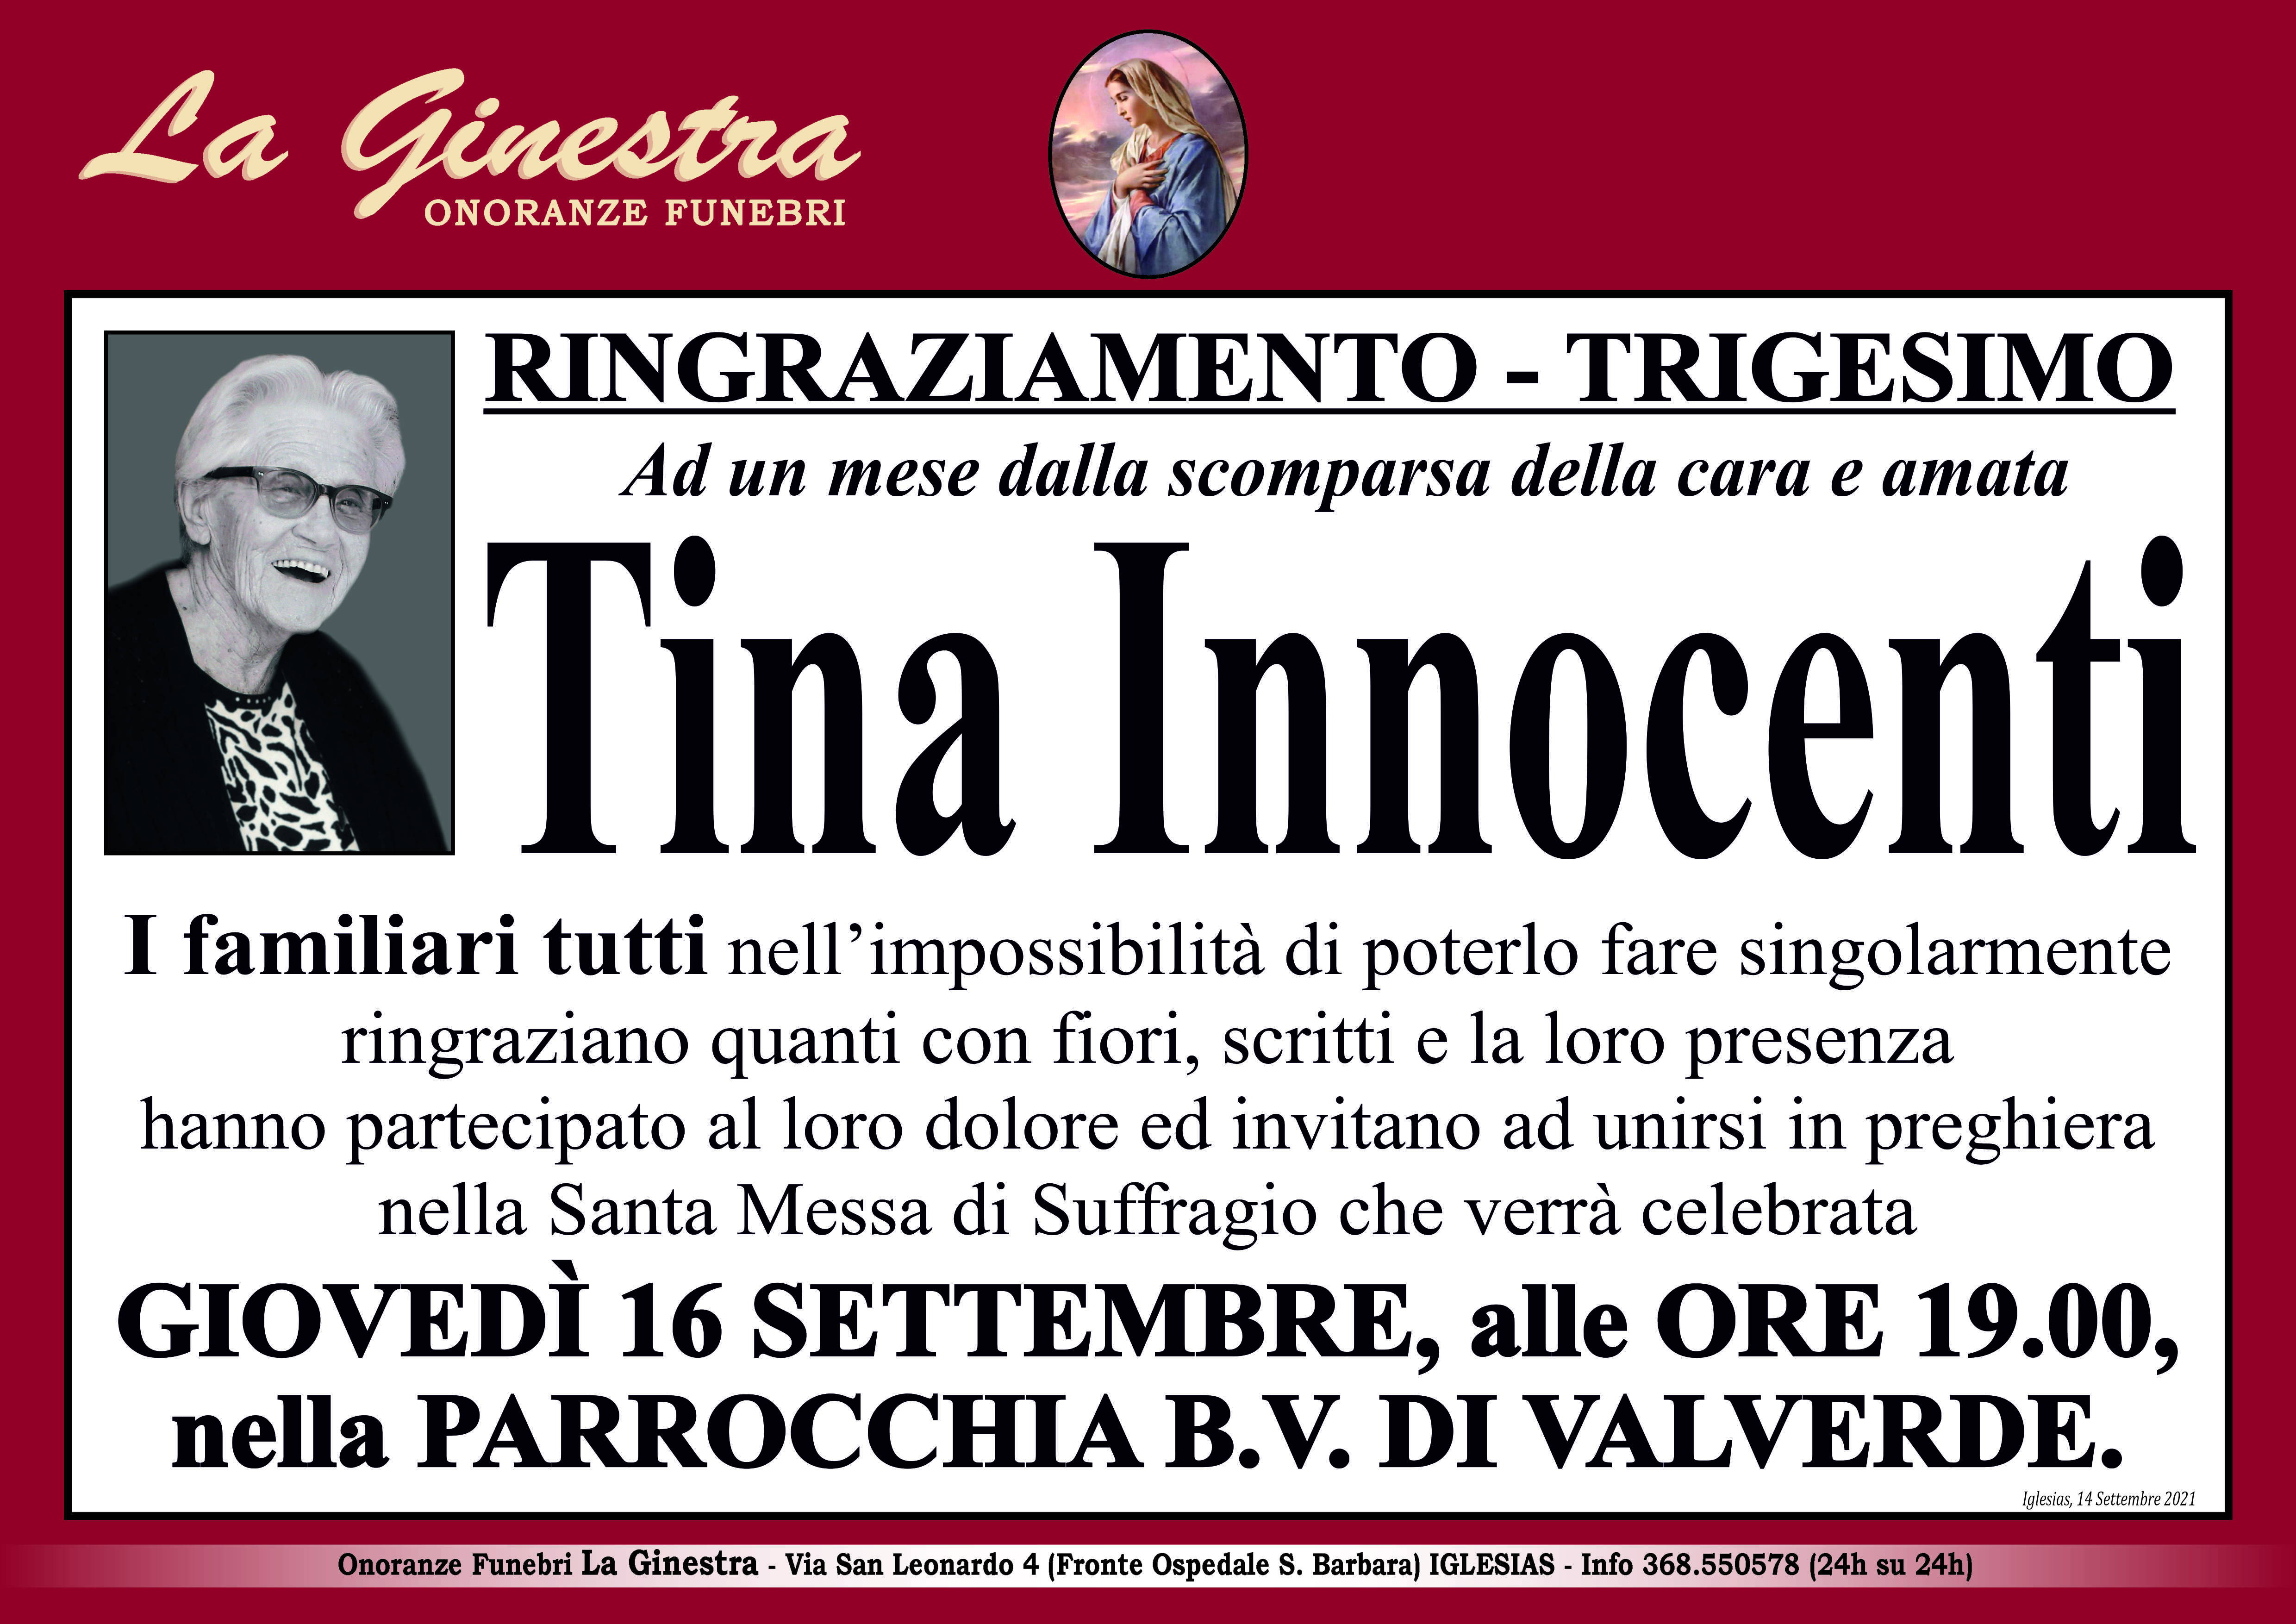 Tina Innocenti